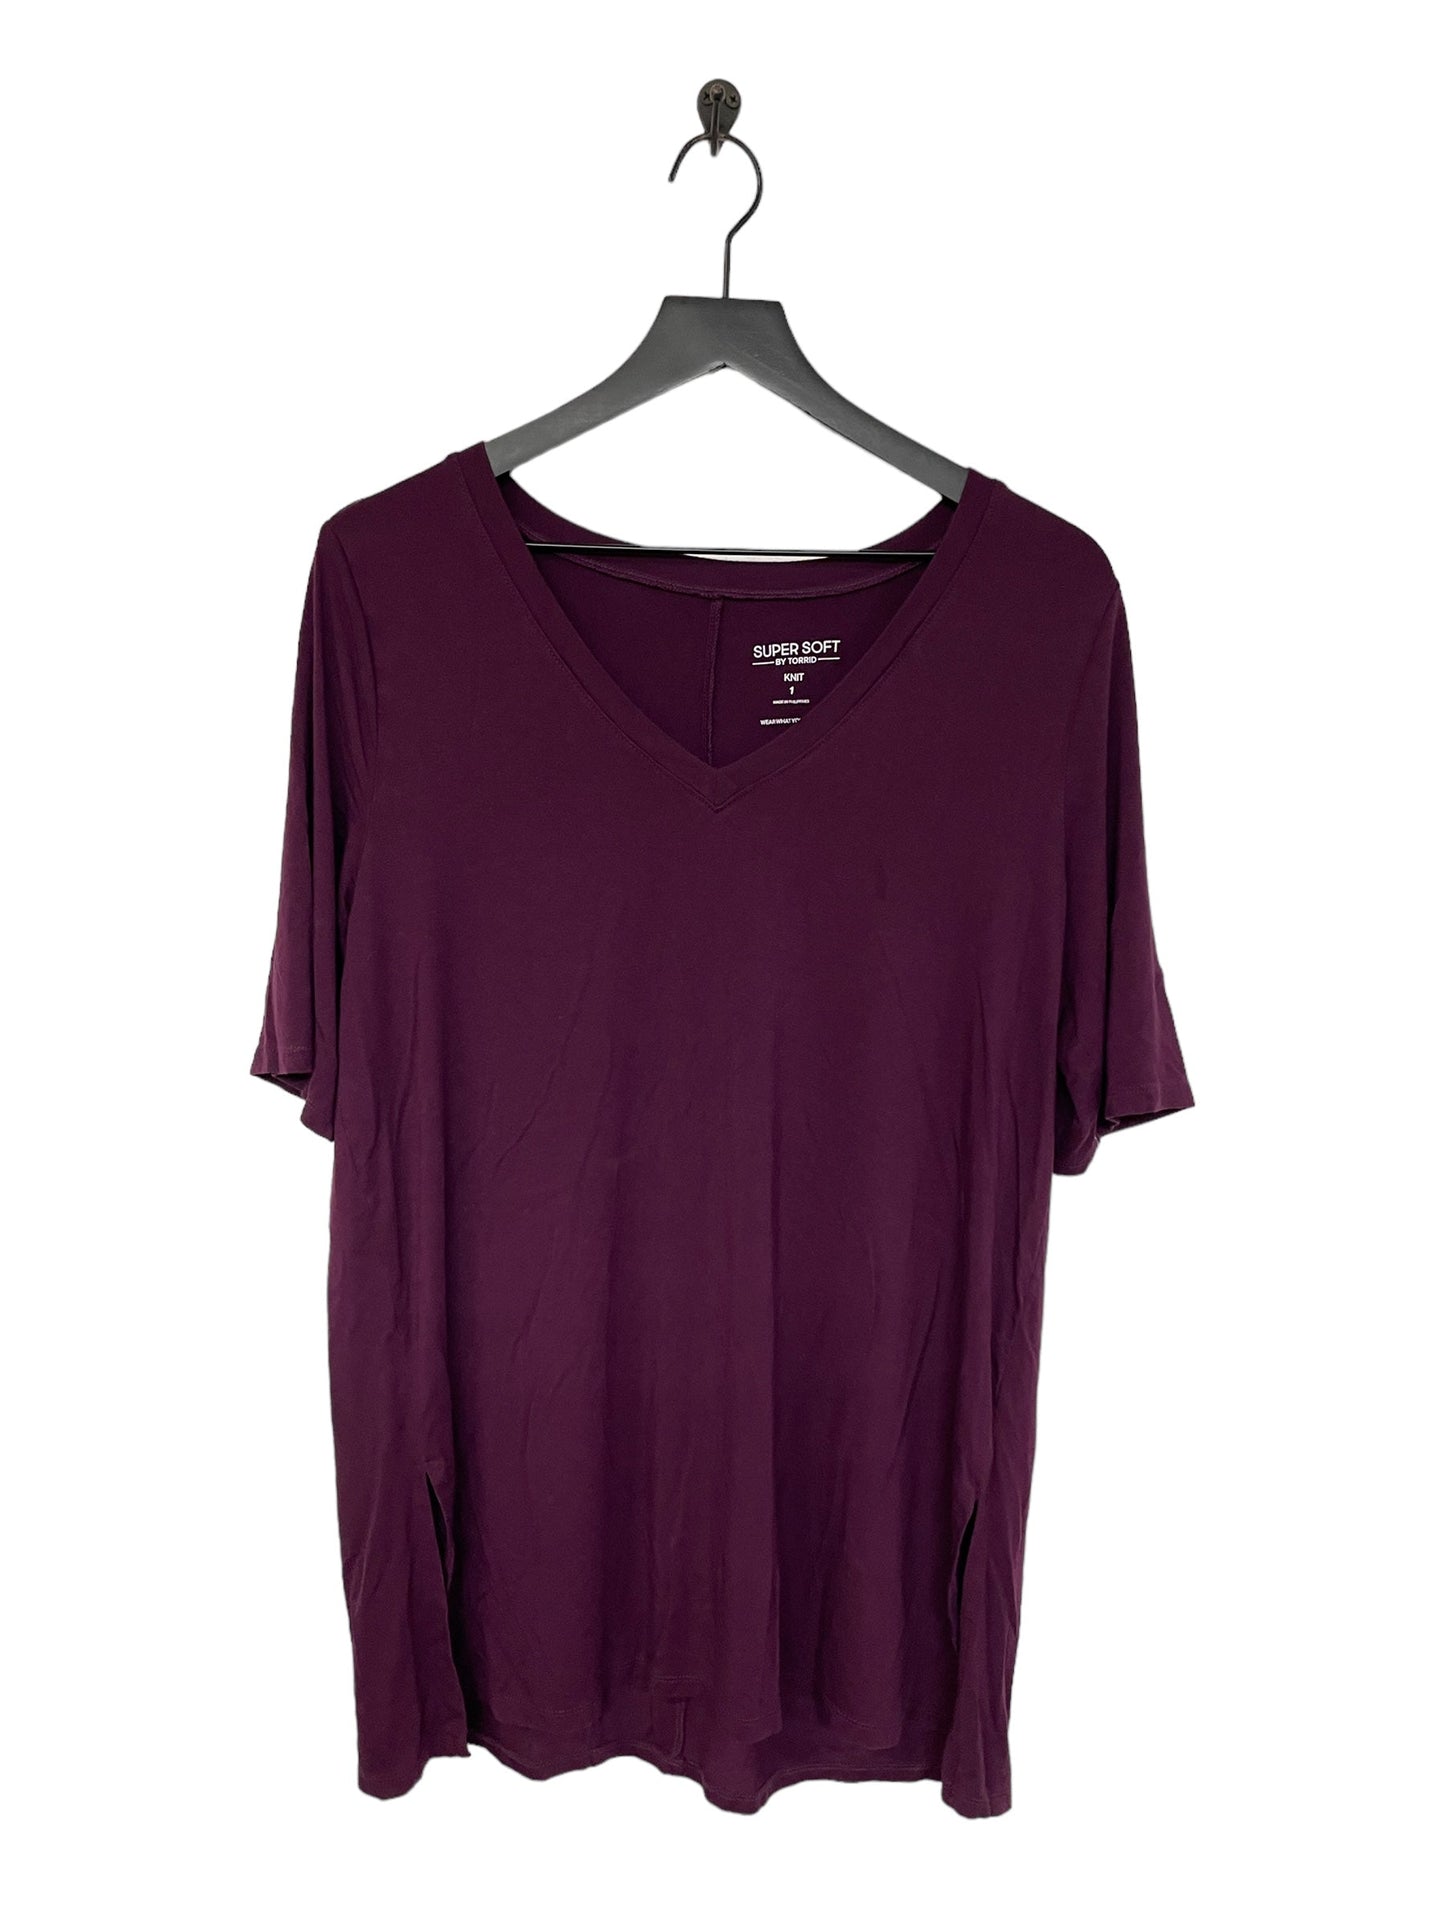 Purple Top Short Sleeve Basic Torrid, Size 1x